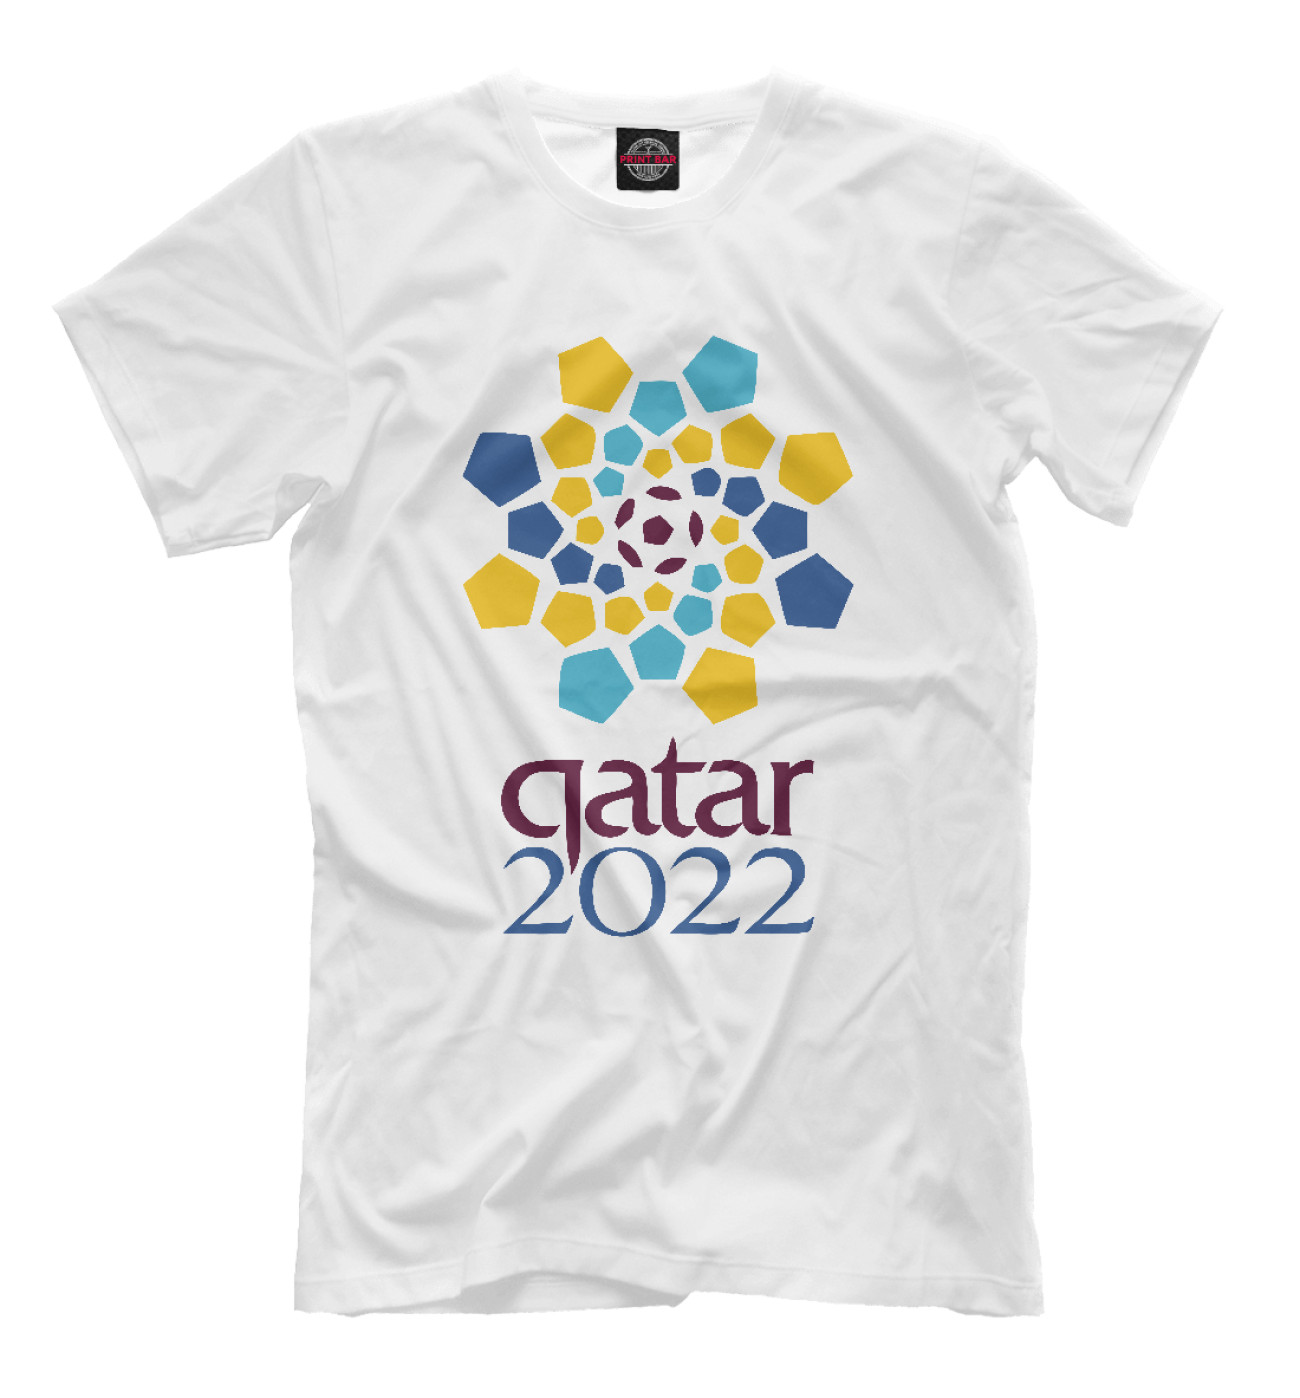 Мужская Футболка Катар 2022, артикул: RZN-949968-fut-2